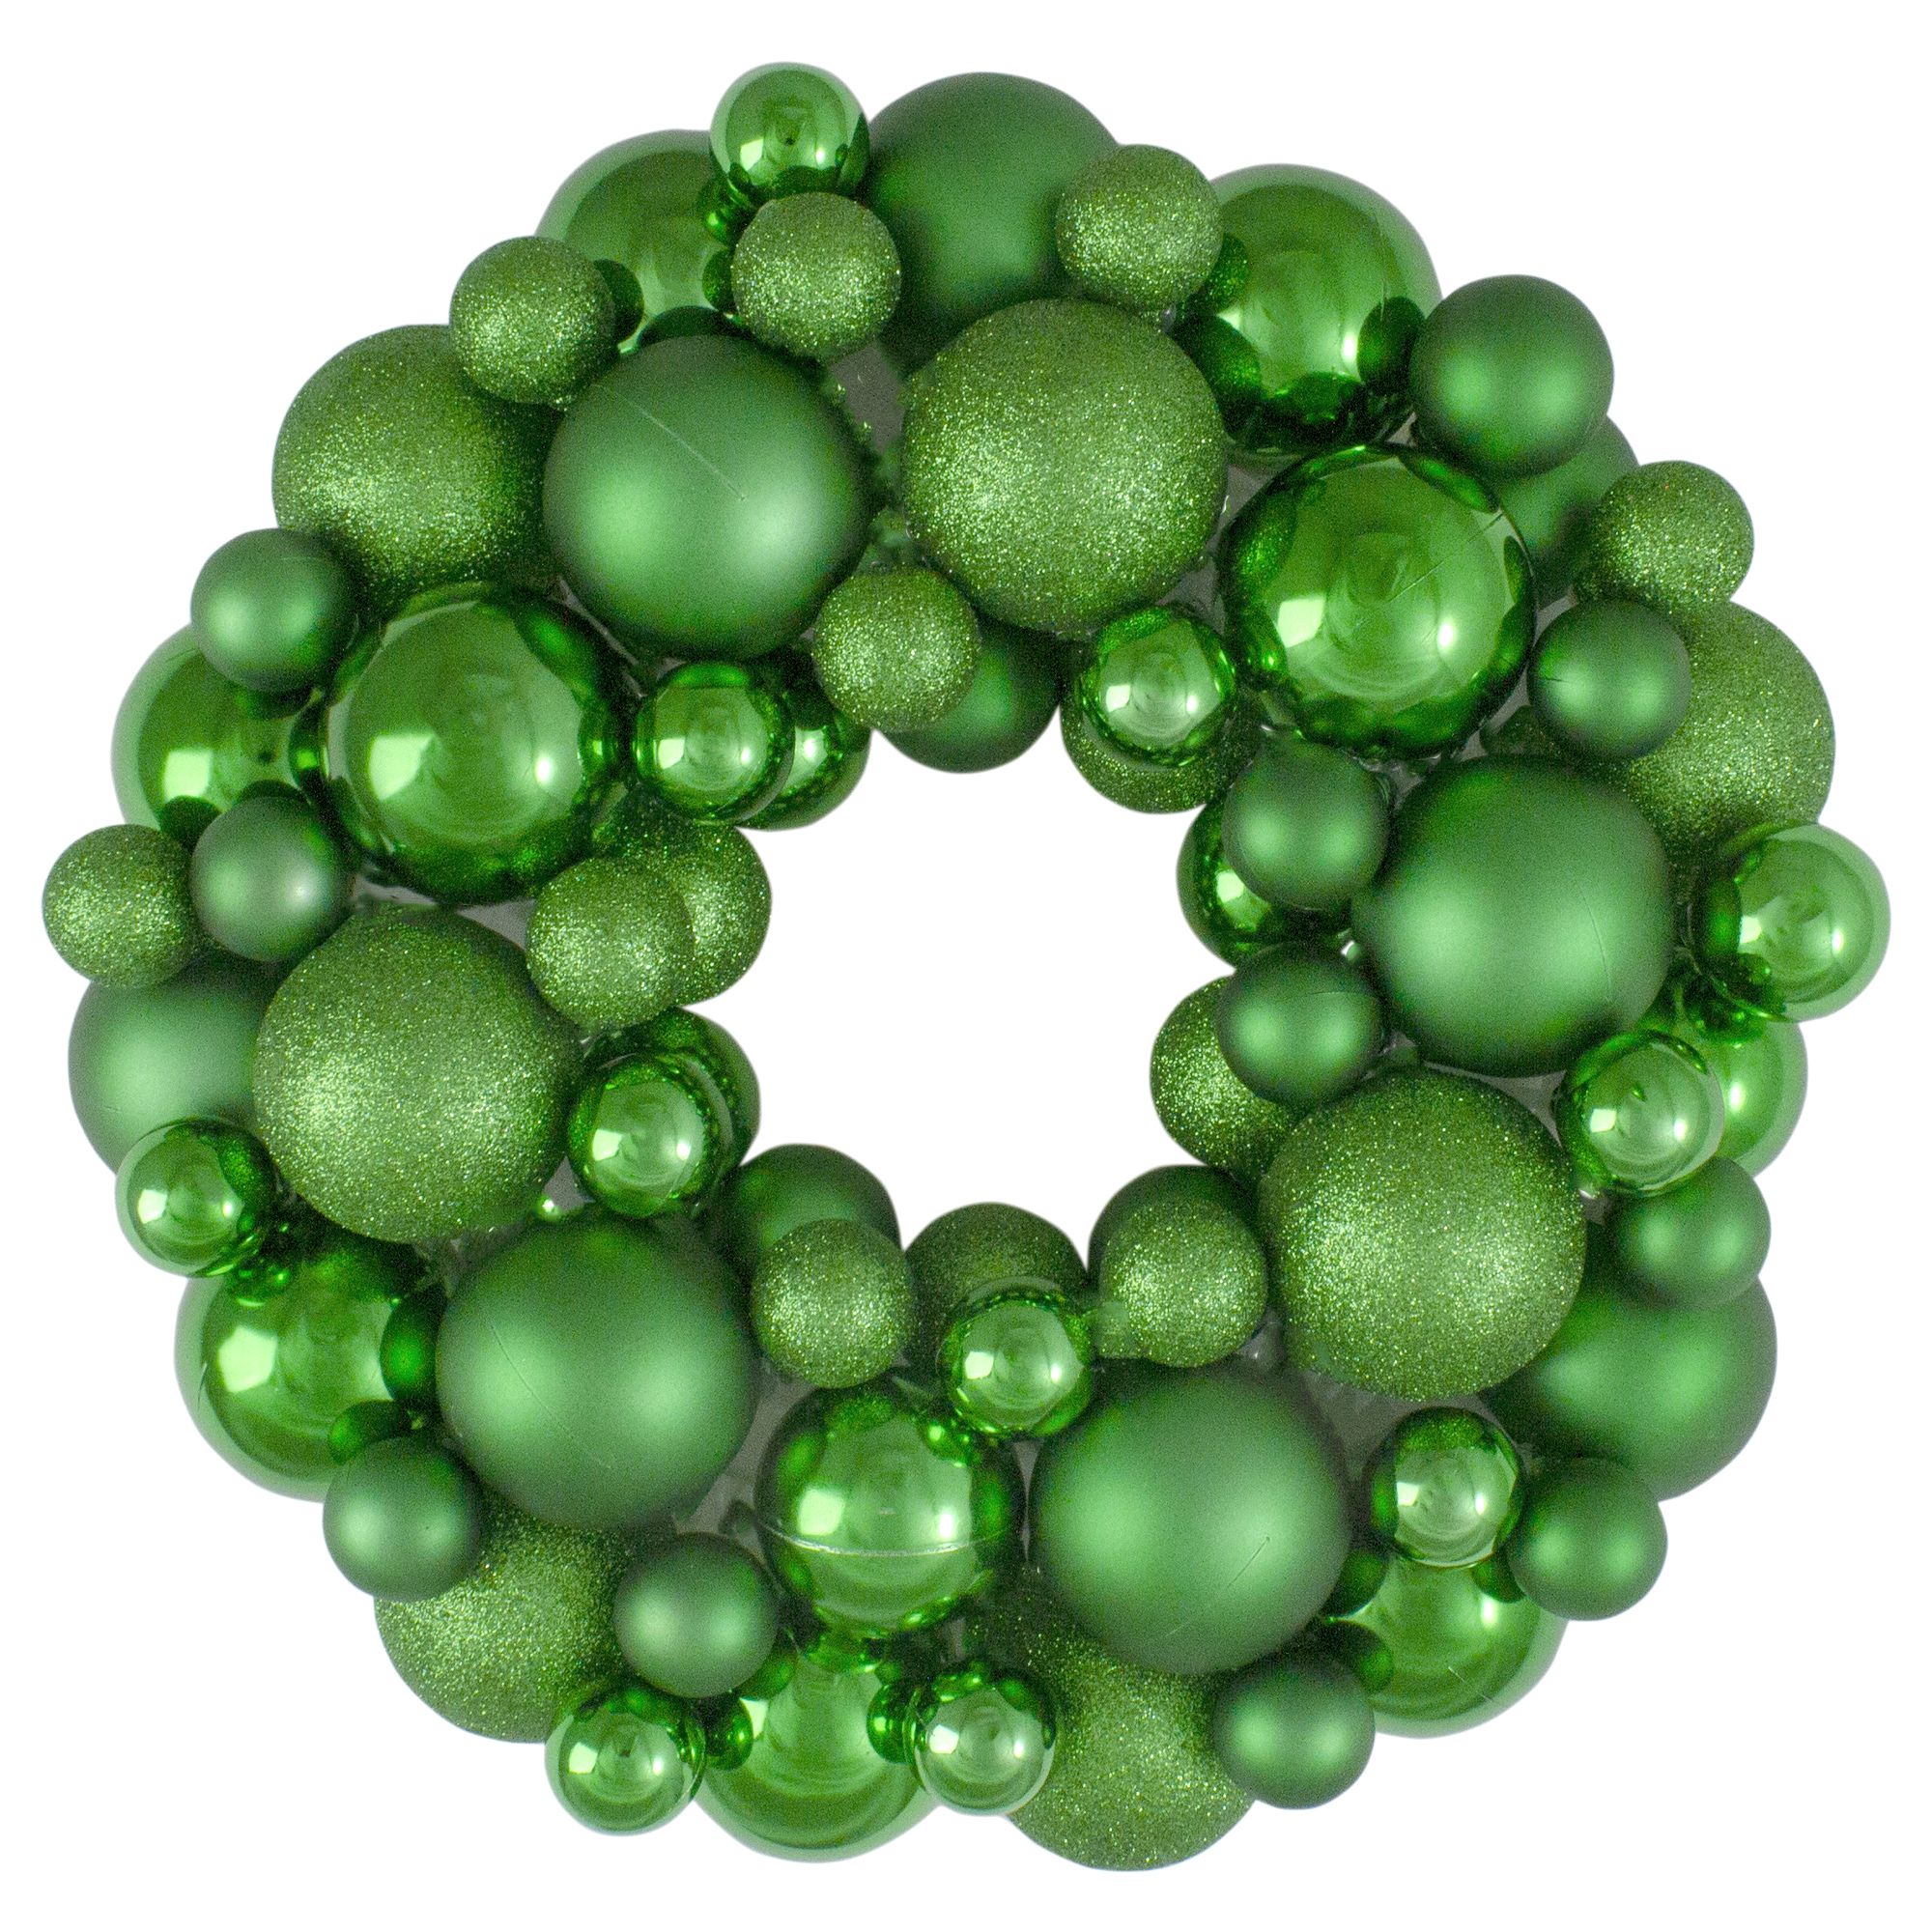 Northlight 13&quot; Green 3-Finish Shatterproof Ball Christmas Wreath - Unlit